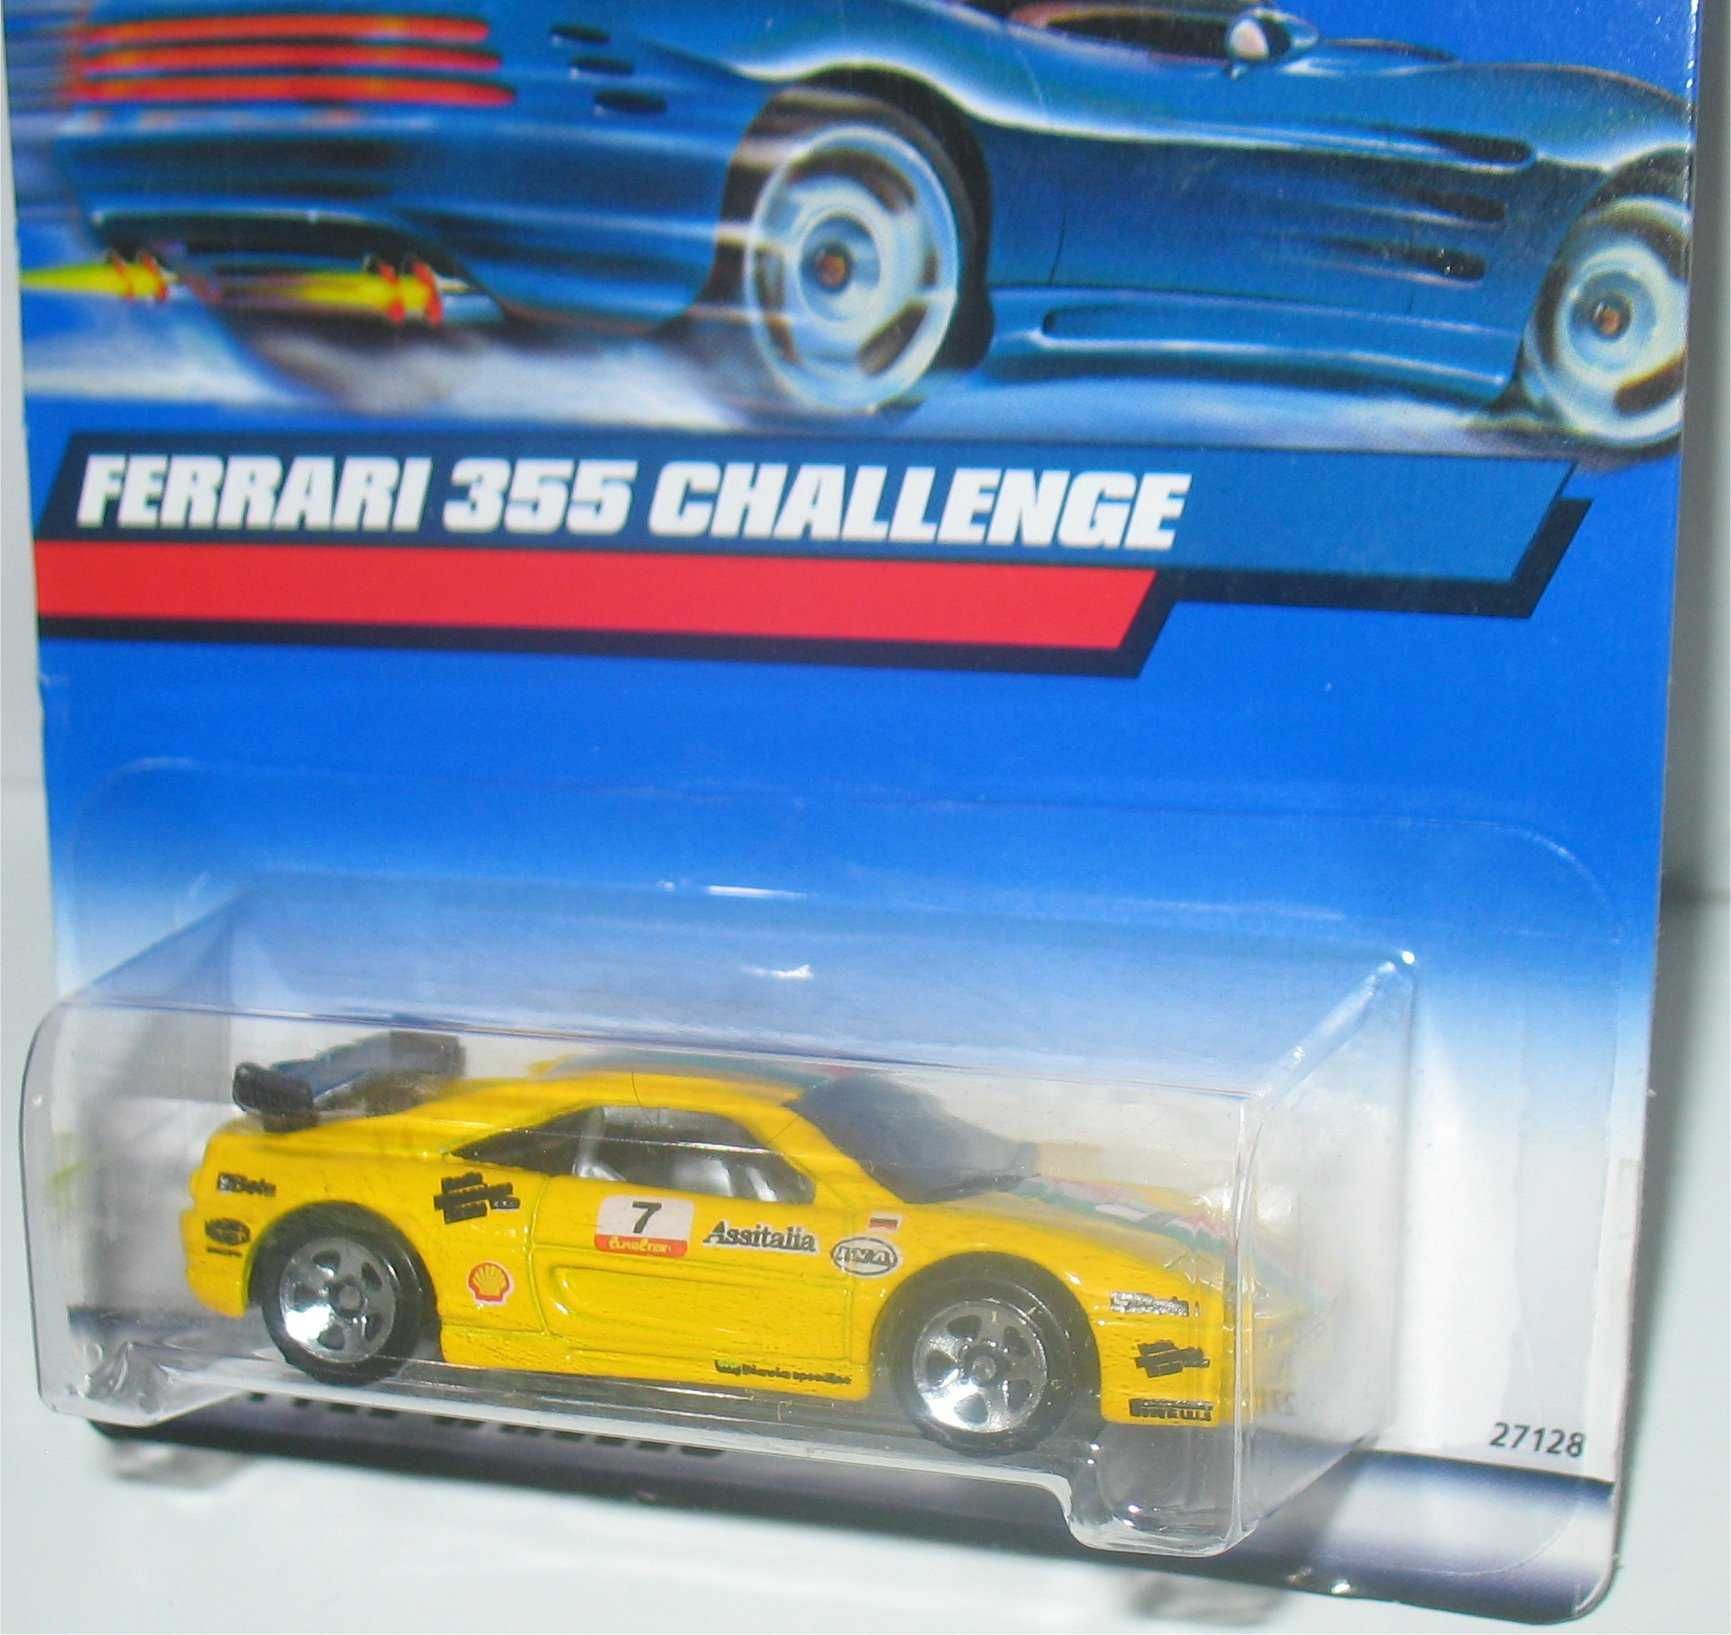 Hot Wheels - Ferrari 355 Challenge (2000)